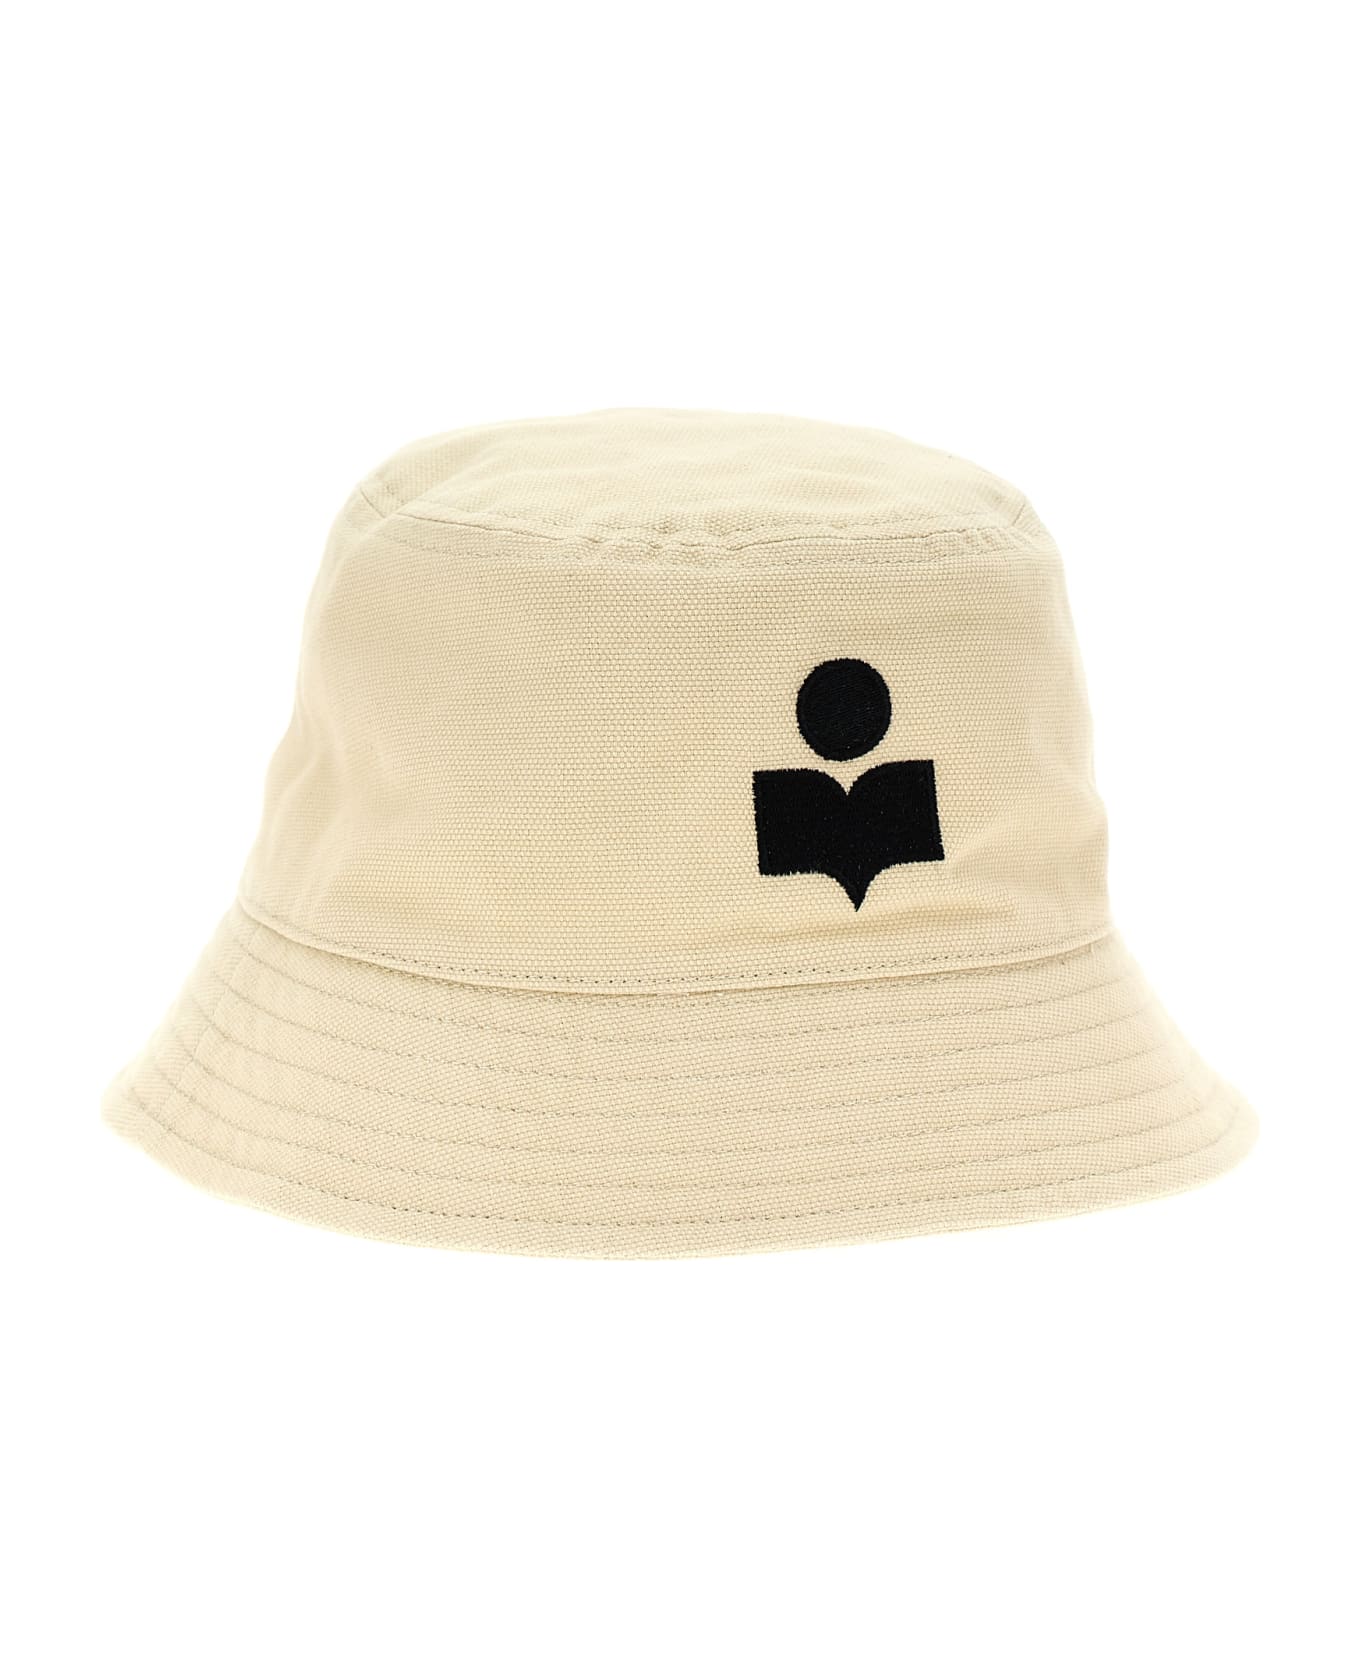 Isabel Marant 'haley' Bucket Hat - White/Black 帽子